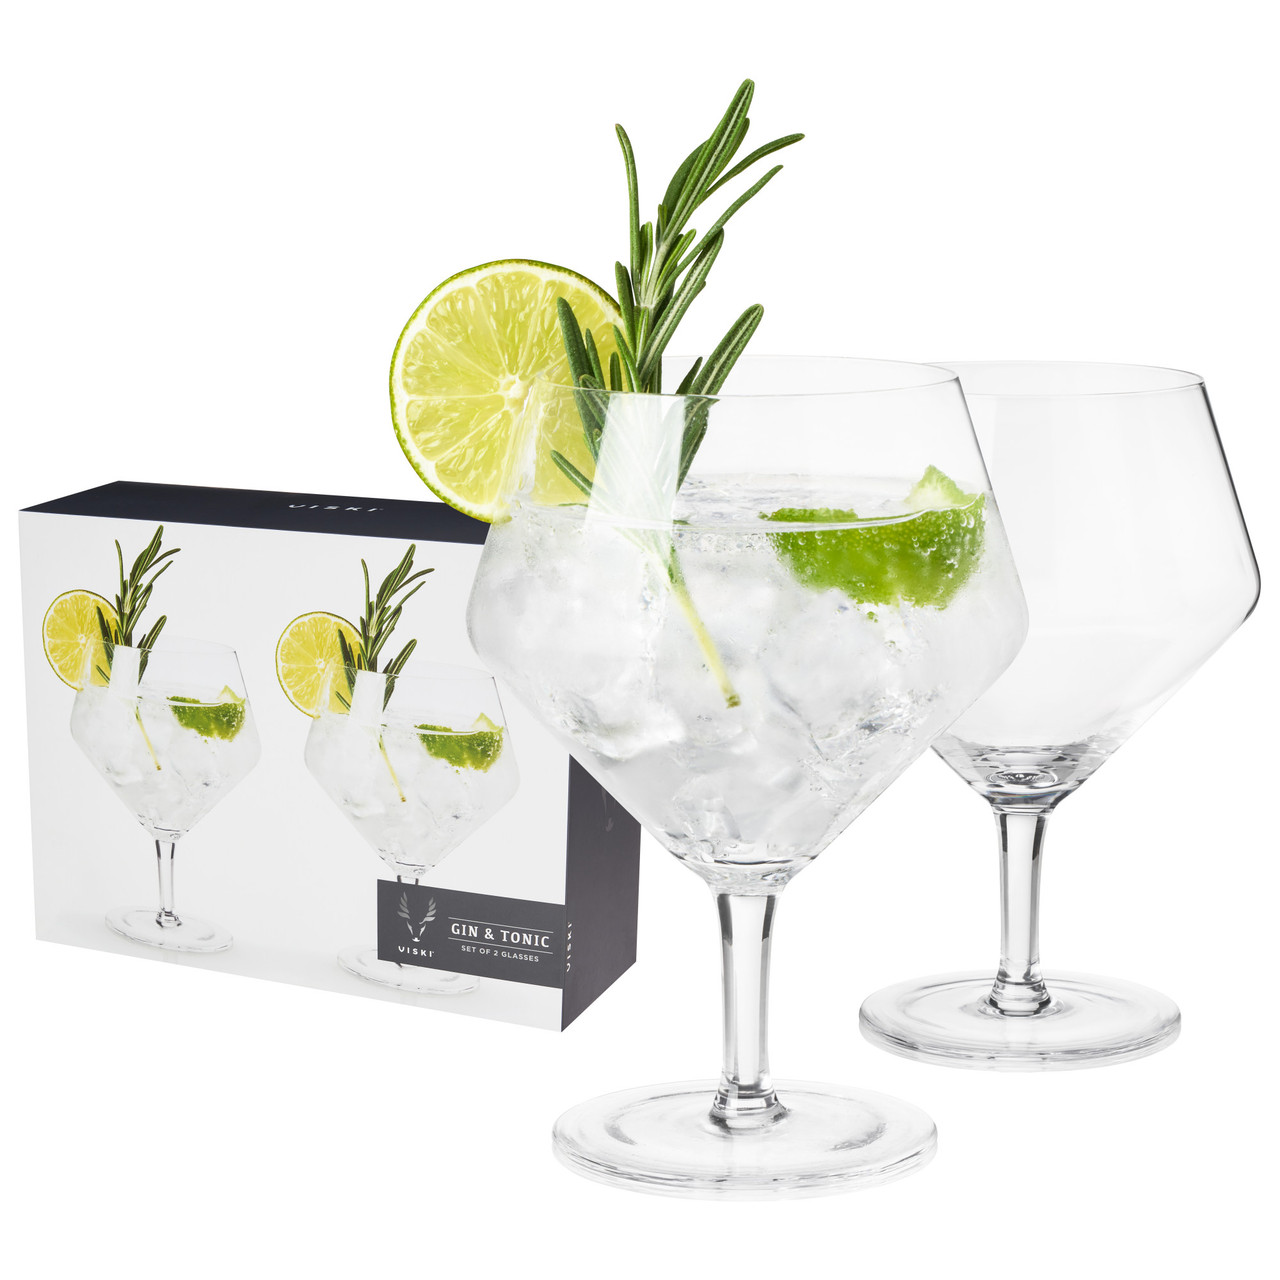 Angled Crystal Gin & Tonic Glasses by Viski, Set of 2 - Drinkware